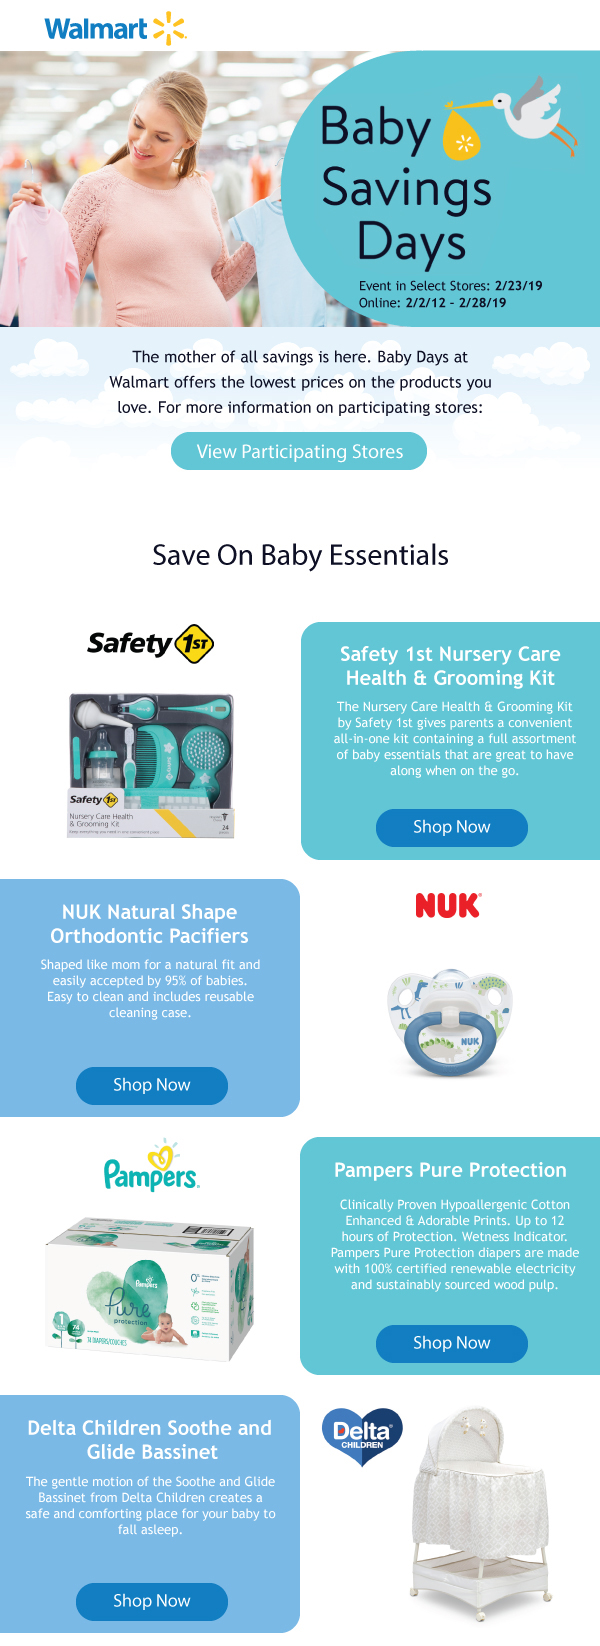 Baby Savings Days Walmart